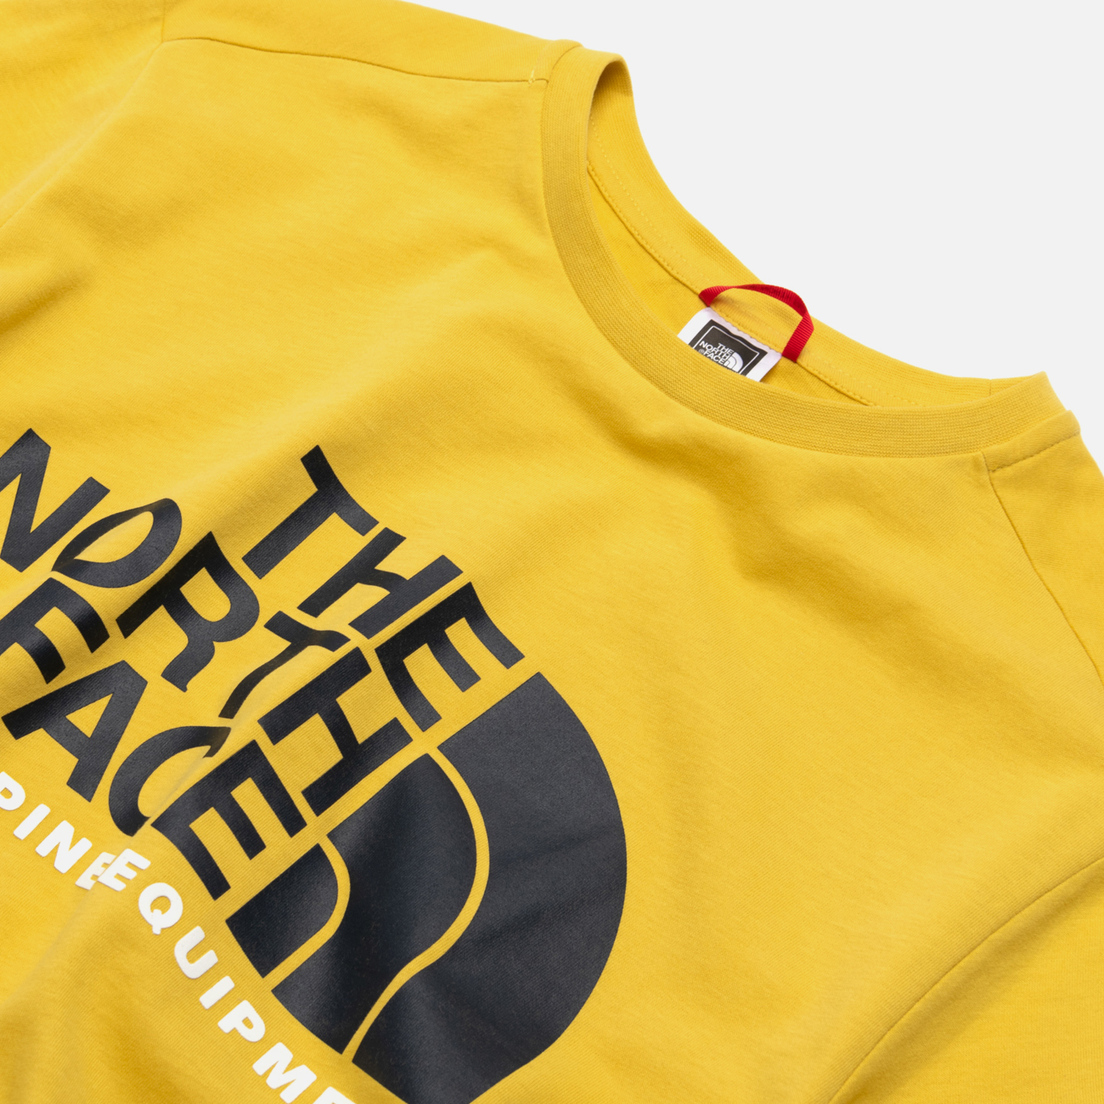 The North Face Мужская футболка Fine Alpine Equipment 2